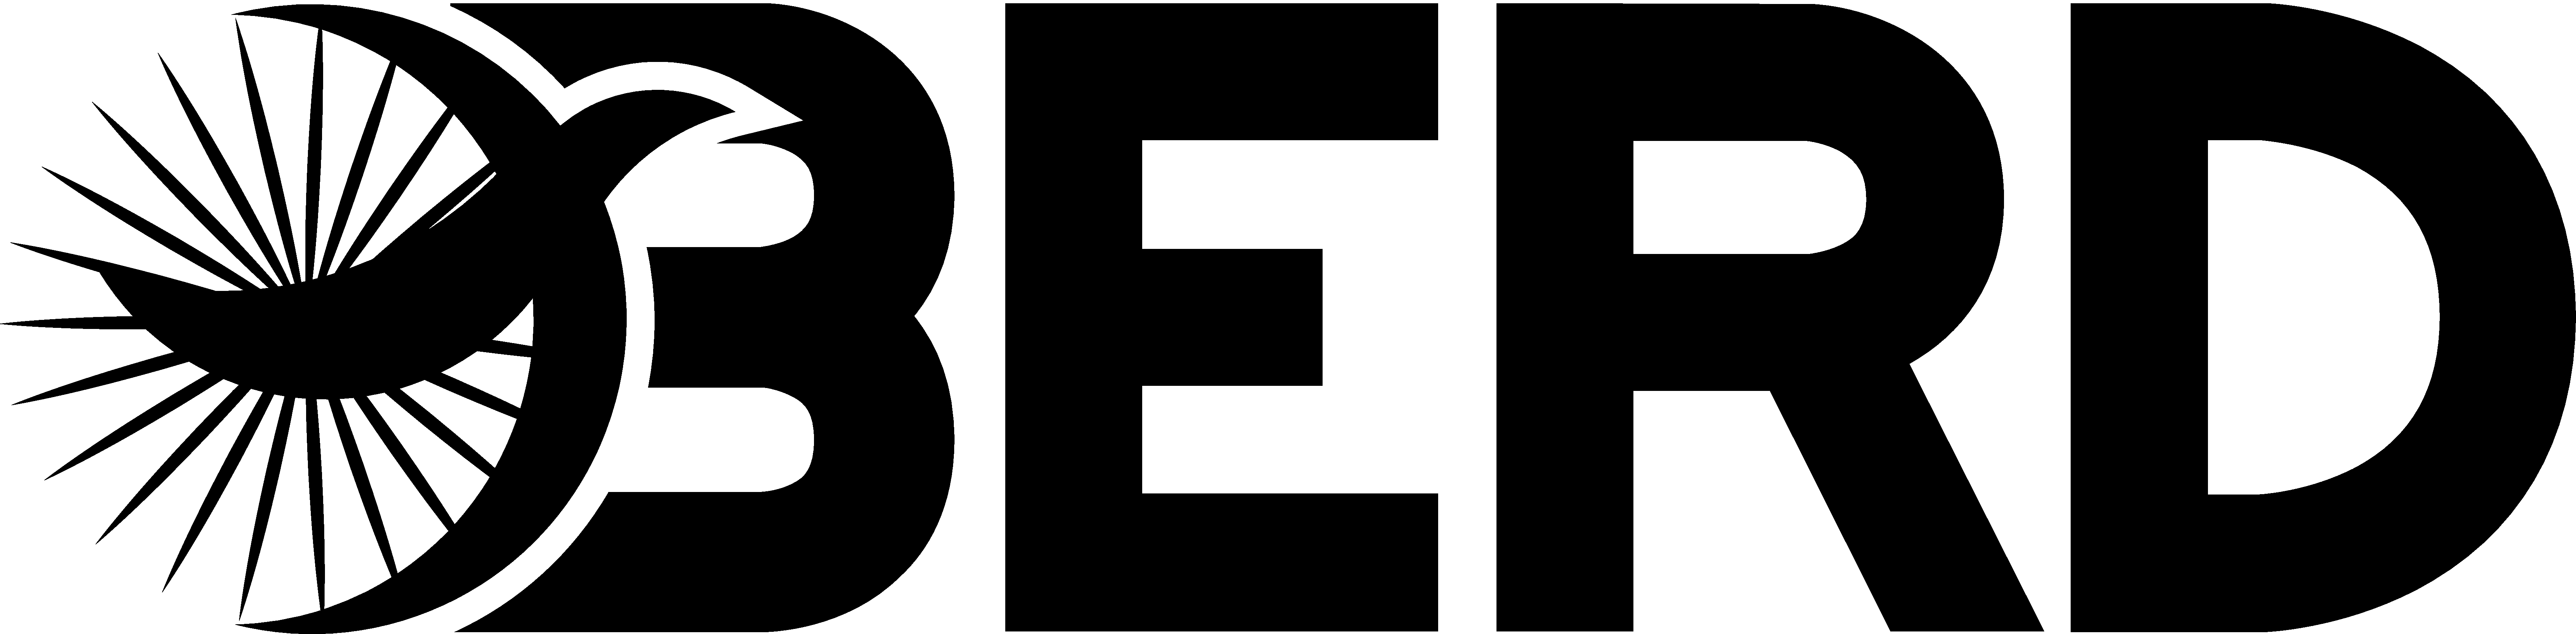 Berd Spokes Logo